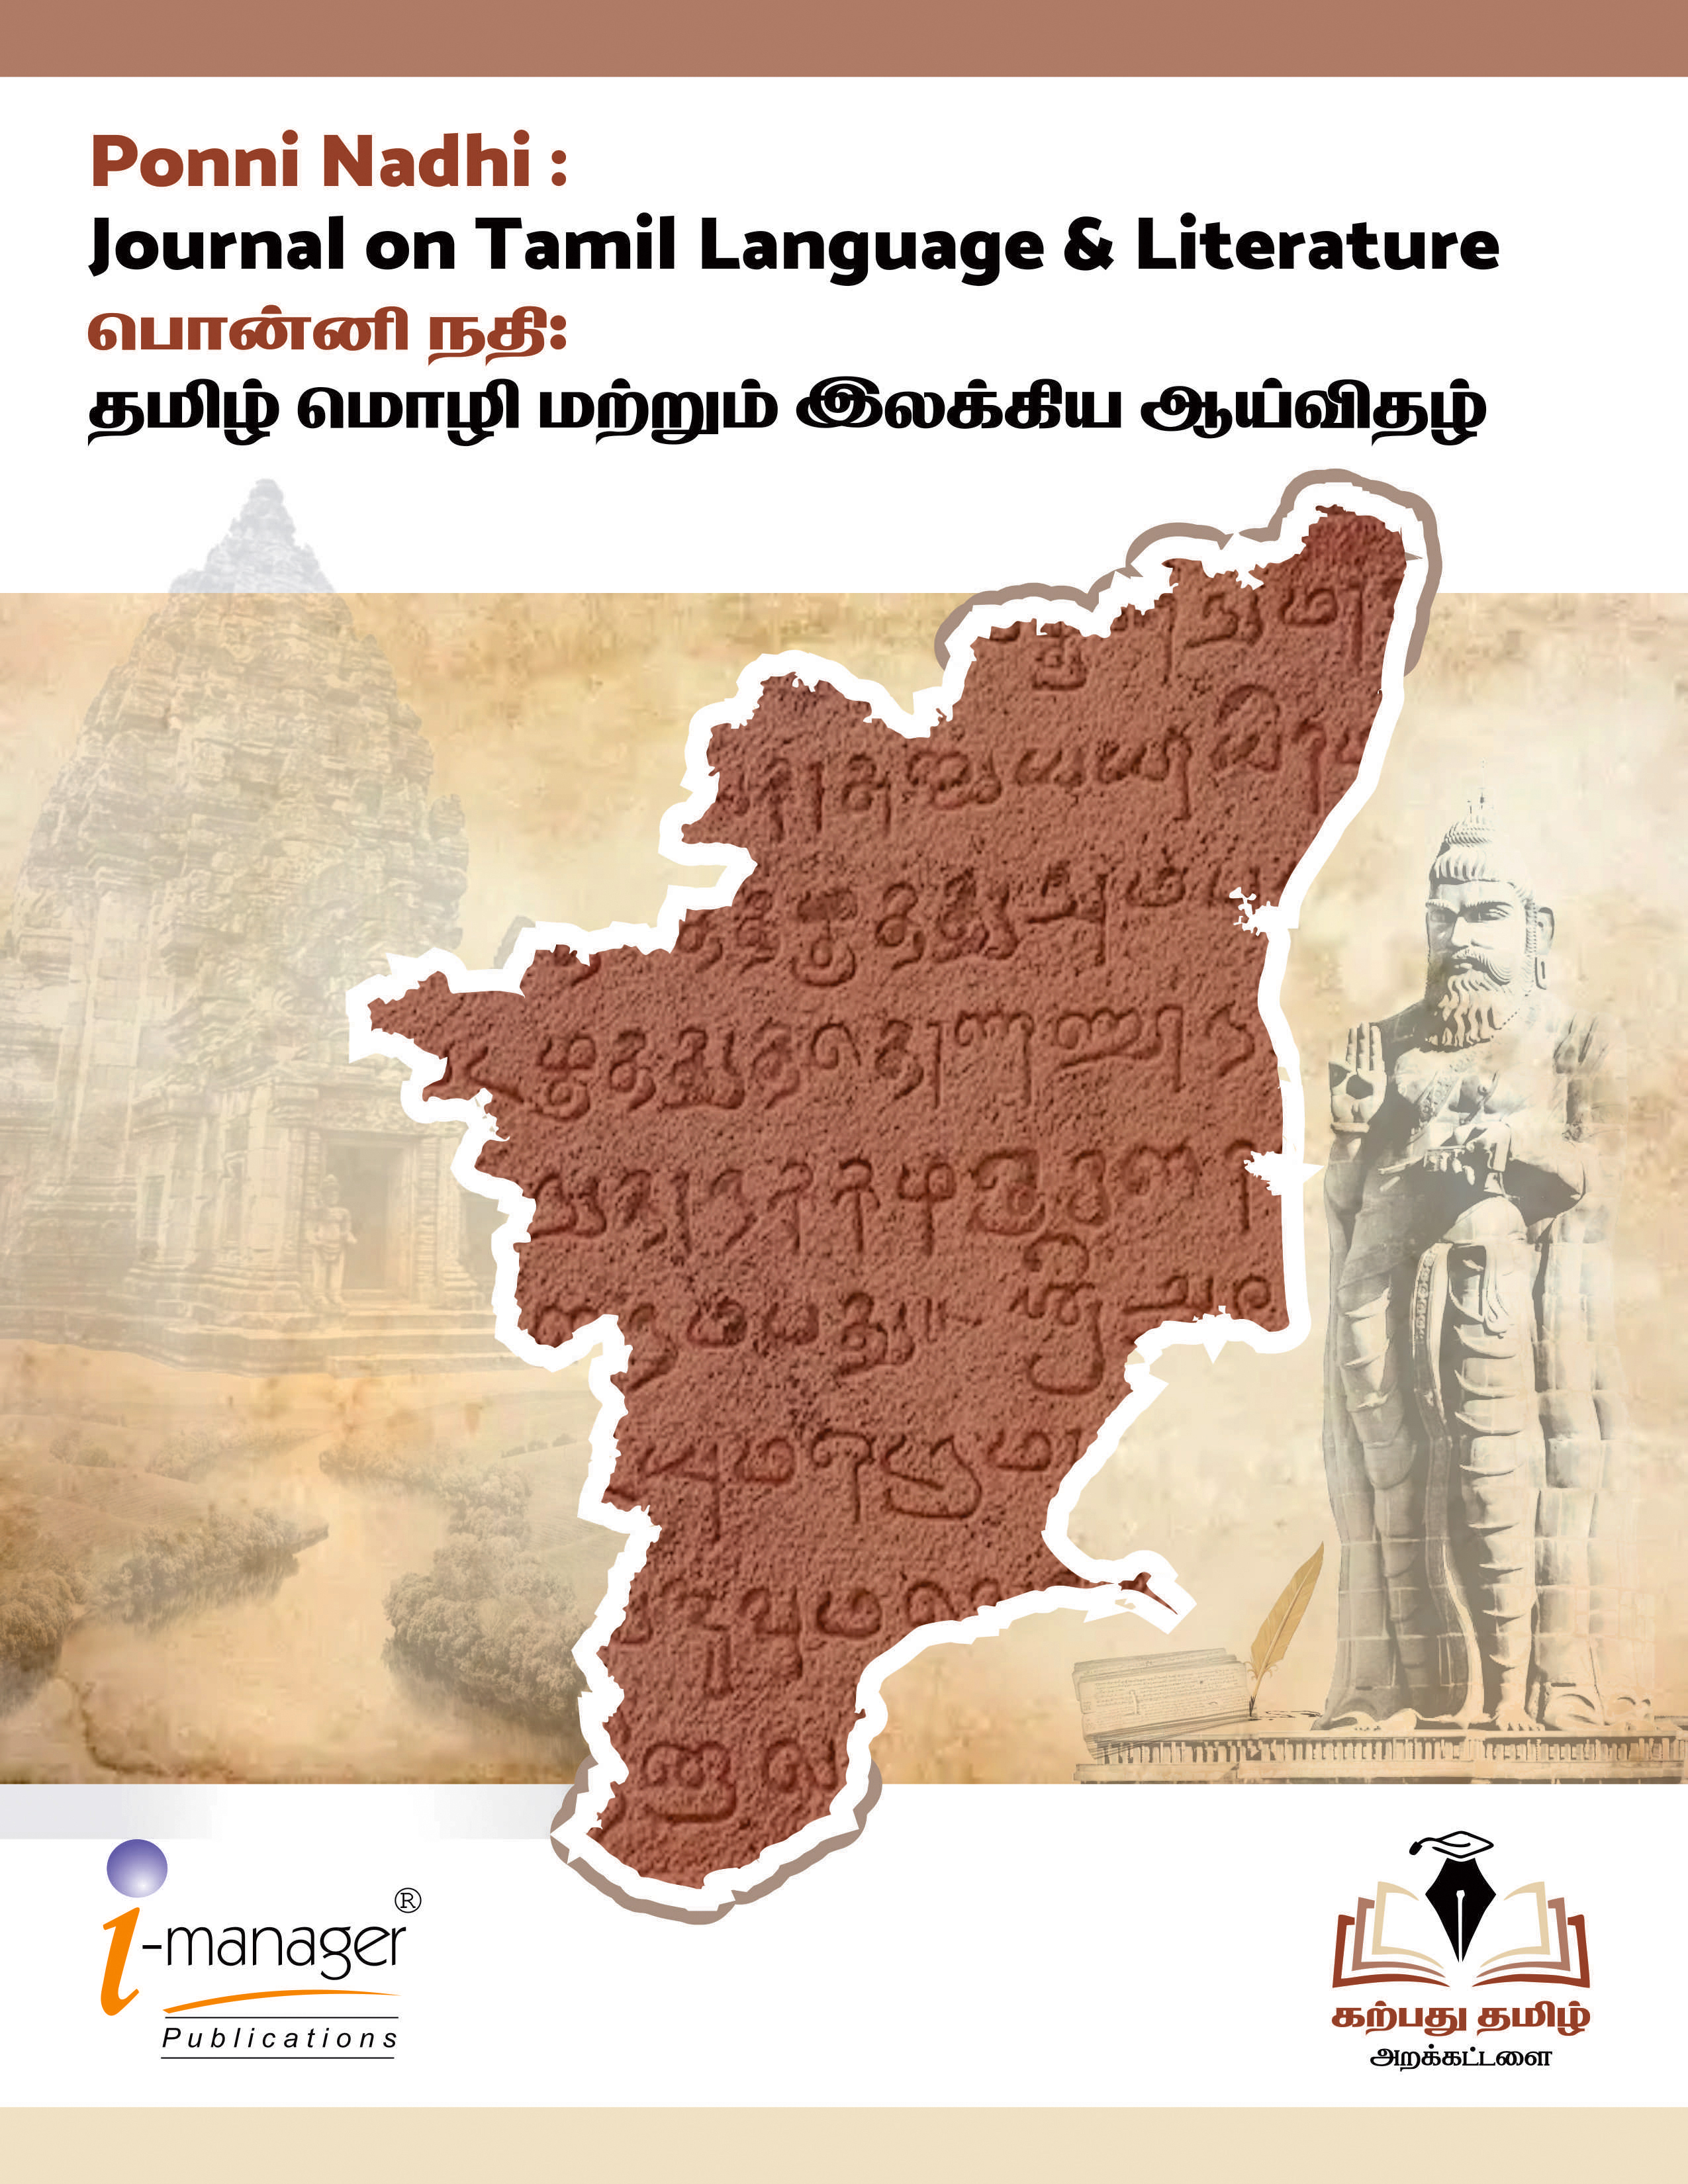 Ponni Nadhi - Journal on Tamil Language & Literature